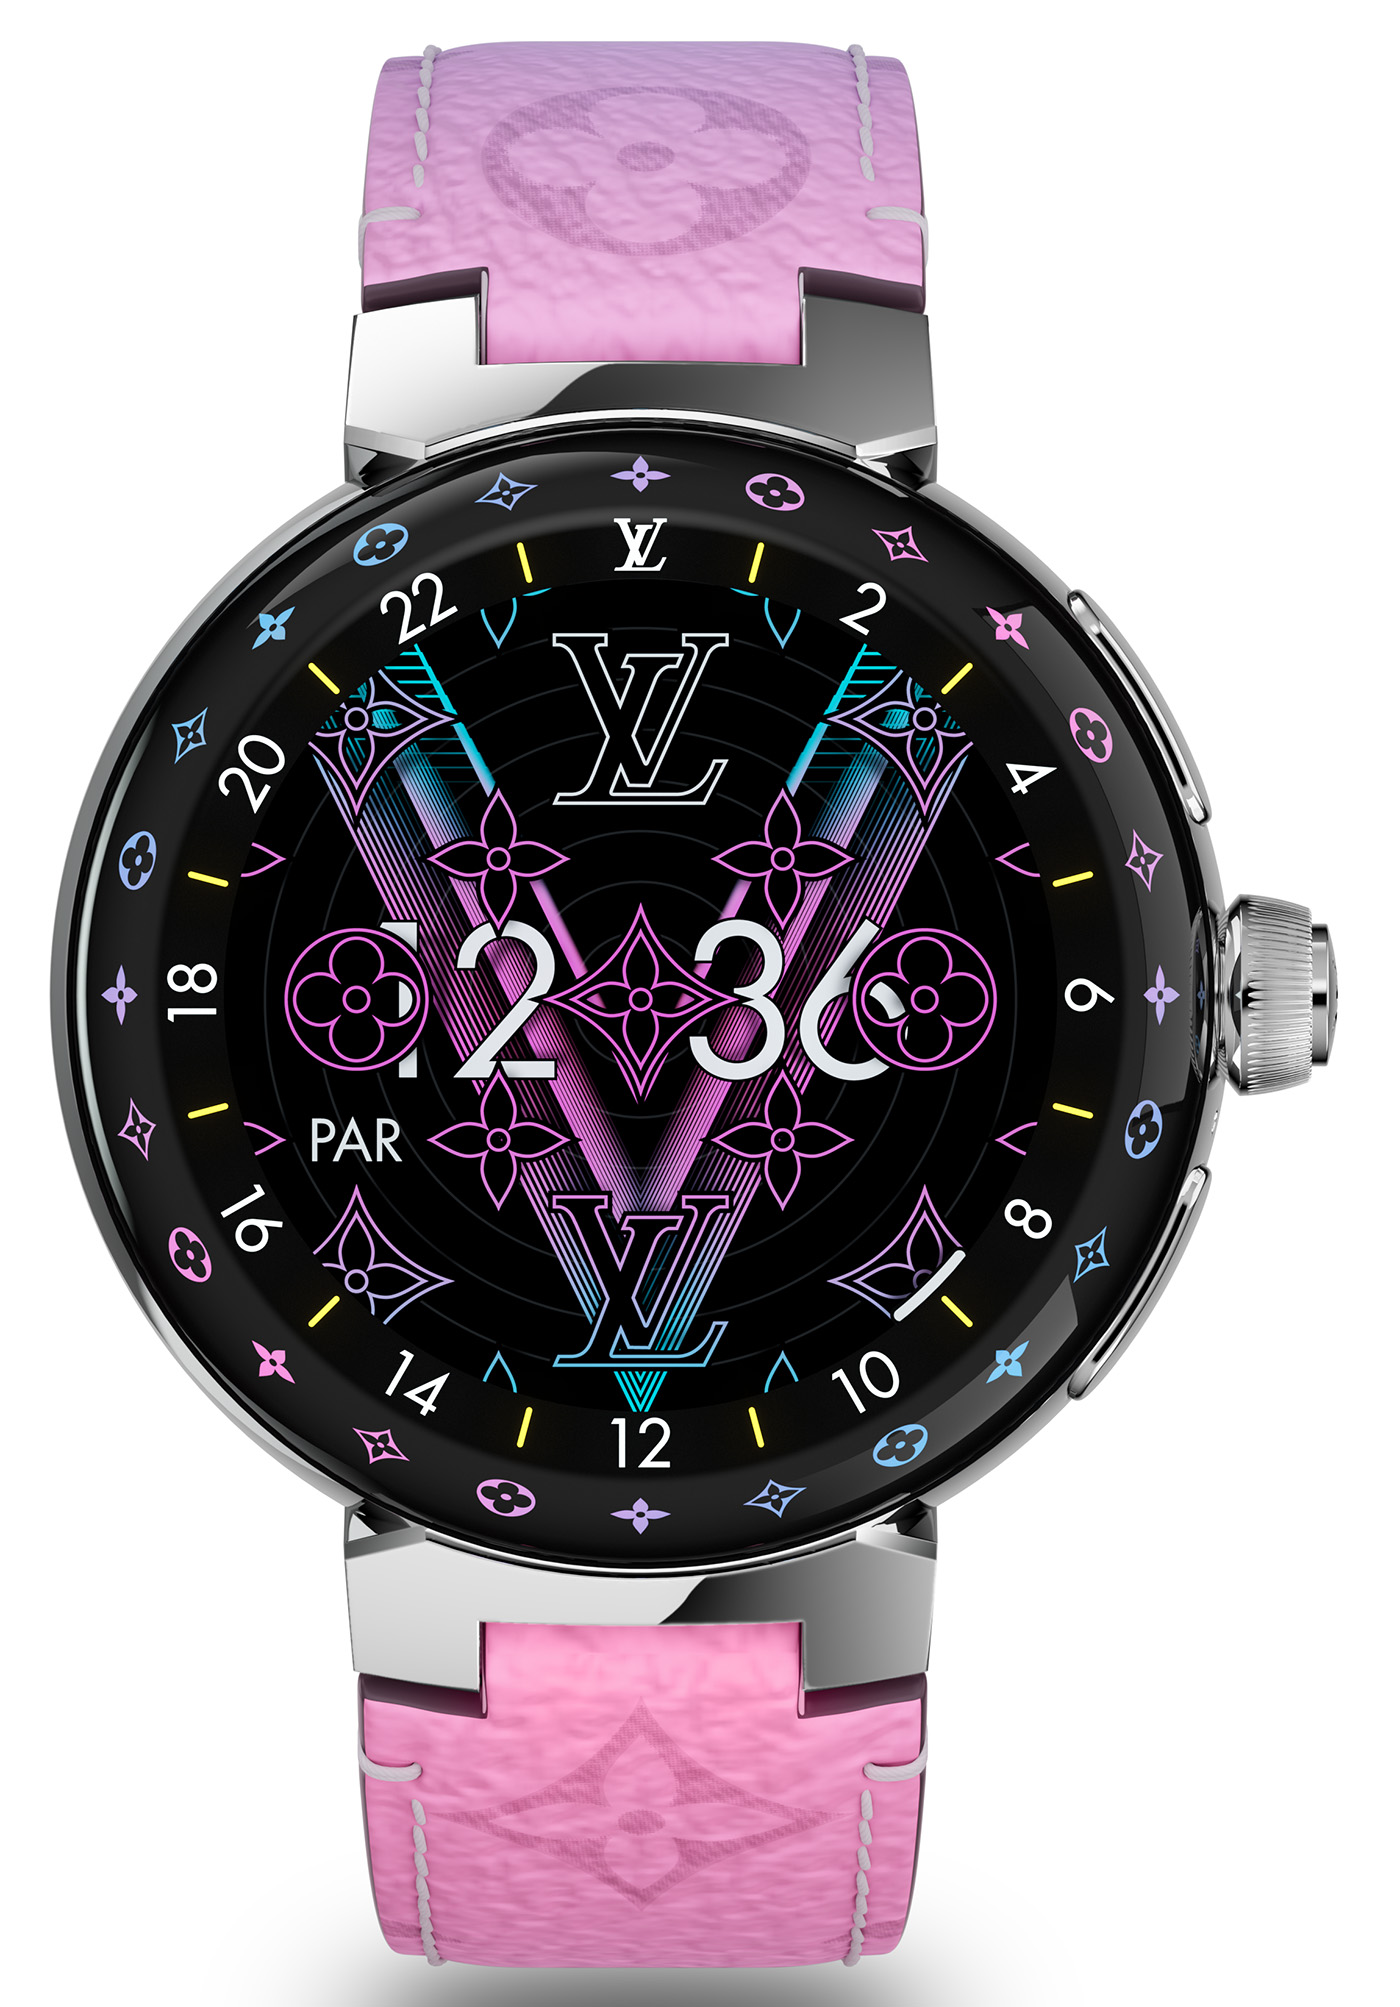 Louis Vuitton's new $3,500 smartwatch, Tambour Horizon Light Up 